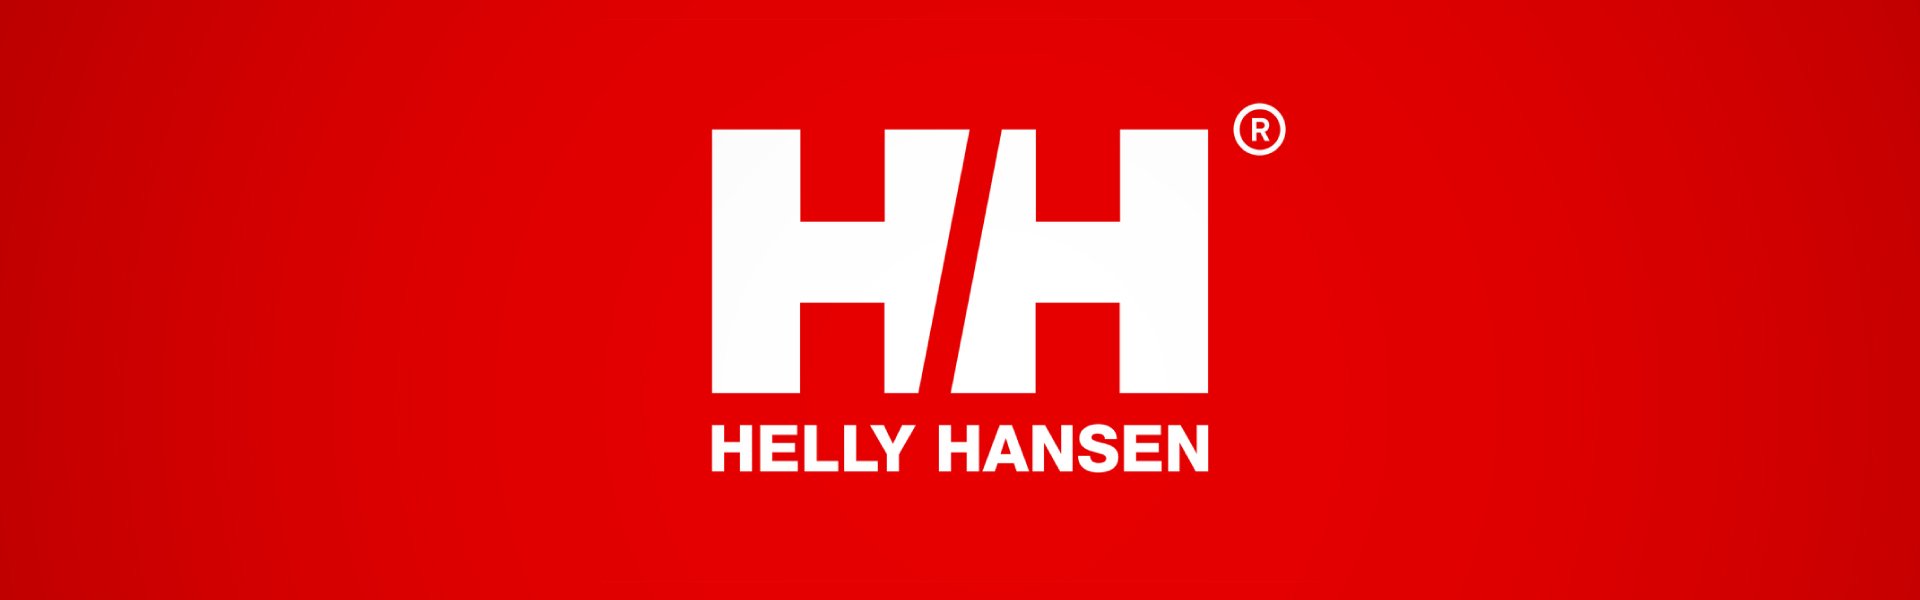 Helly Hansen zīmola bērnu vējjaka Byckle 43154-146-176 Helly Hansen